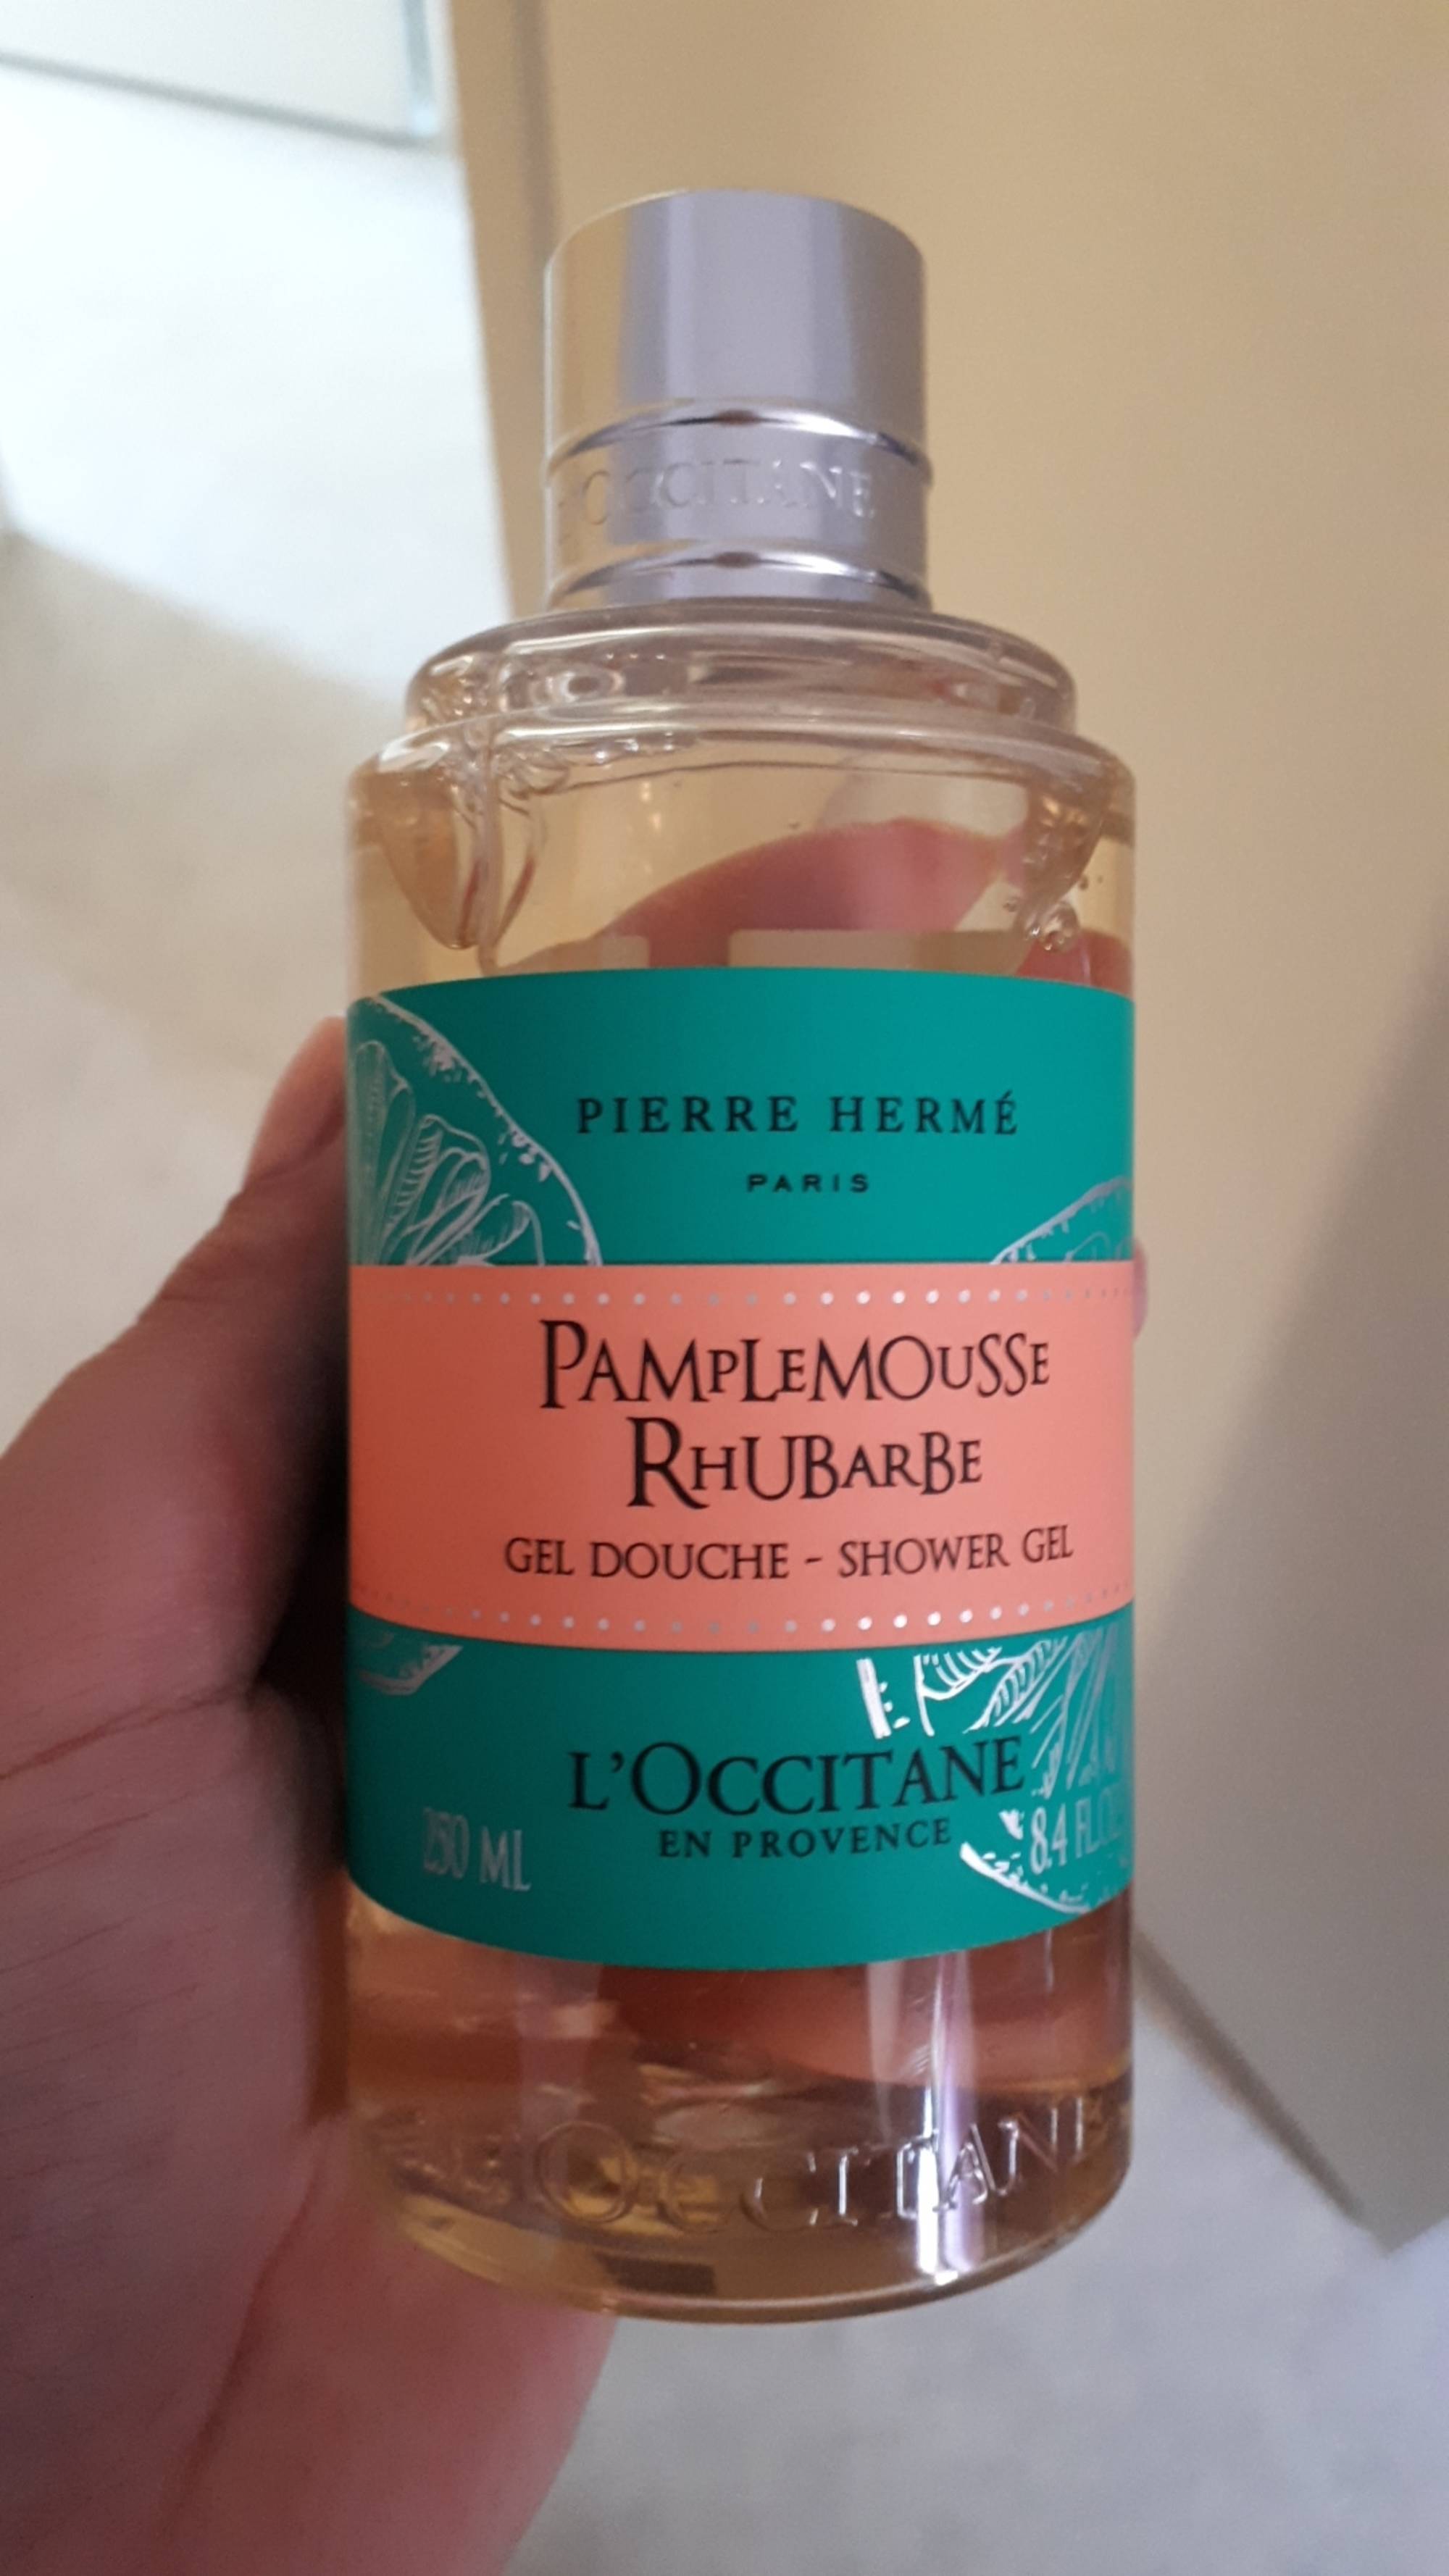 L'OCCITANE - Pamplemousse rhubarbe - Gel douche